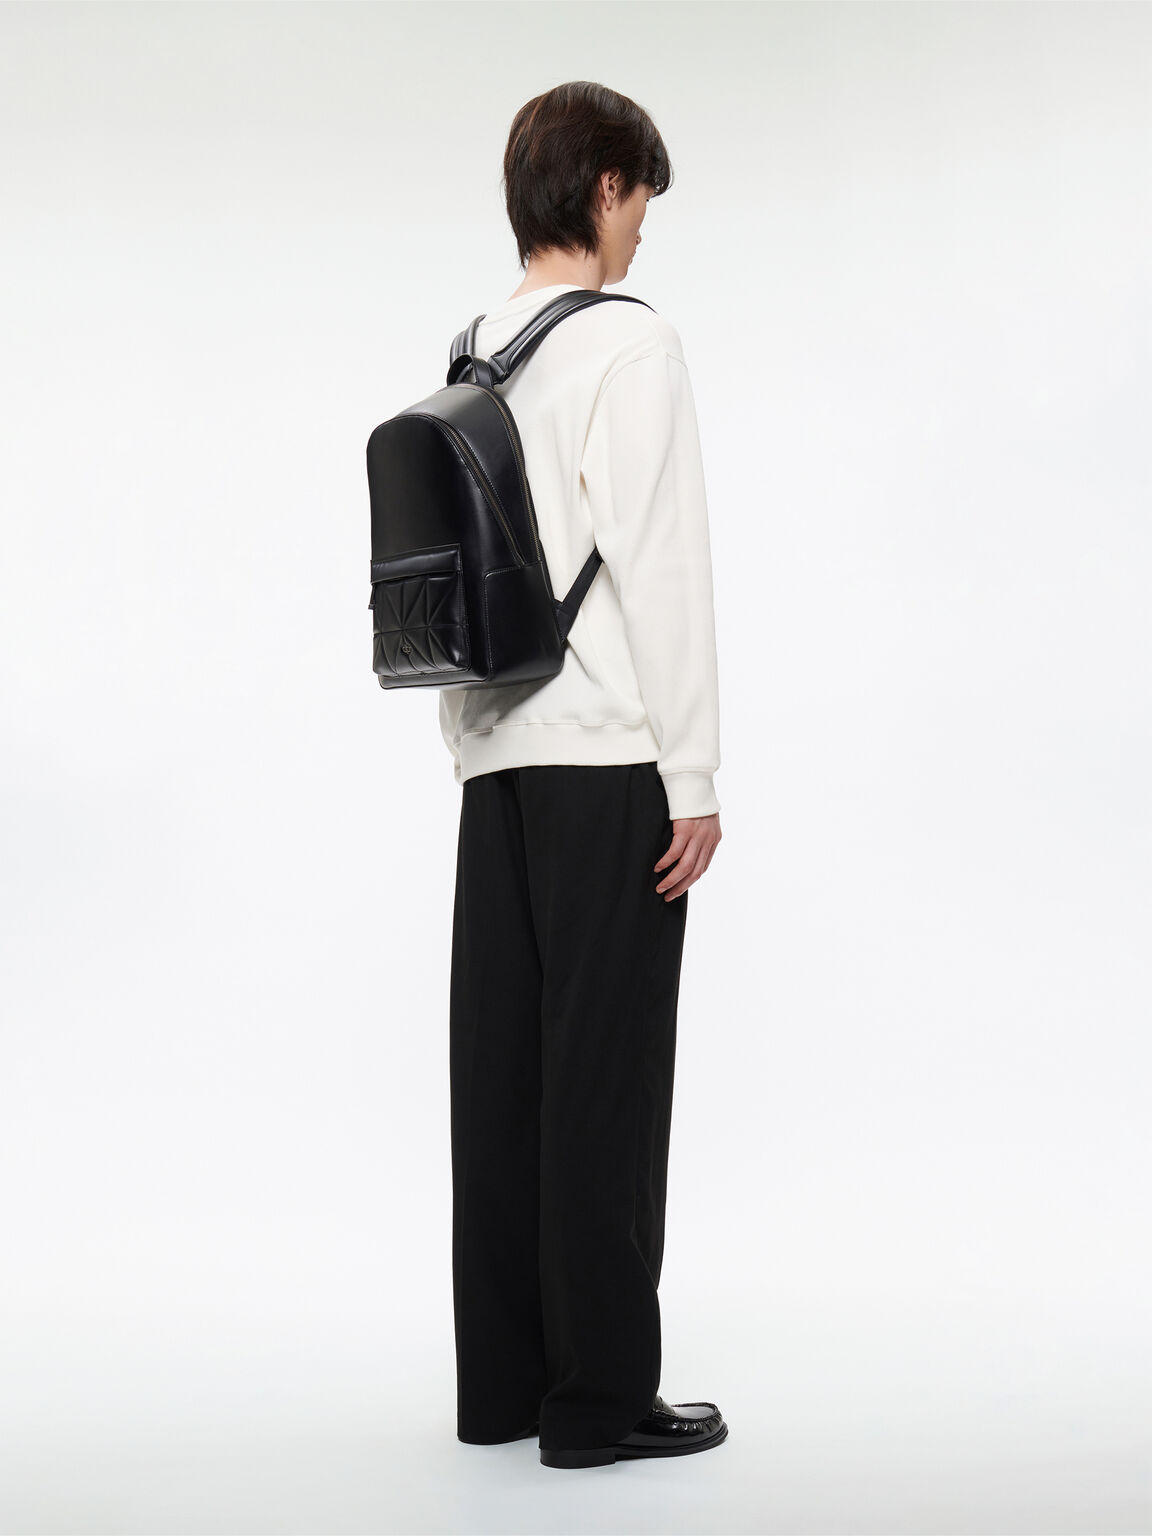 PEDRO Icon Backpack in Pixel, Black, hi-res